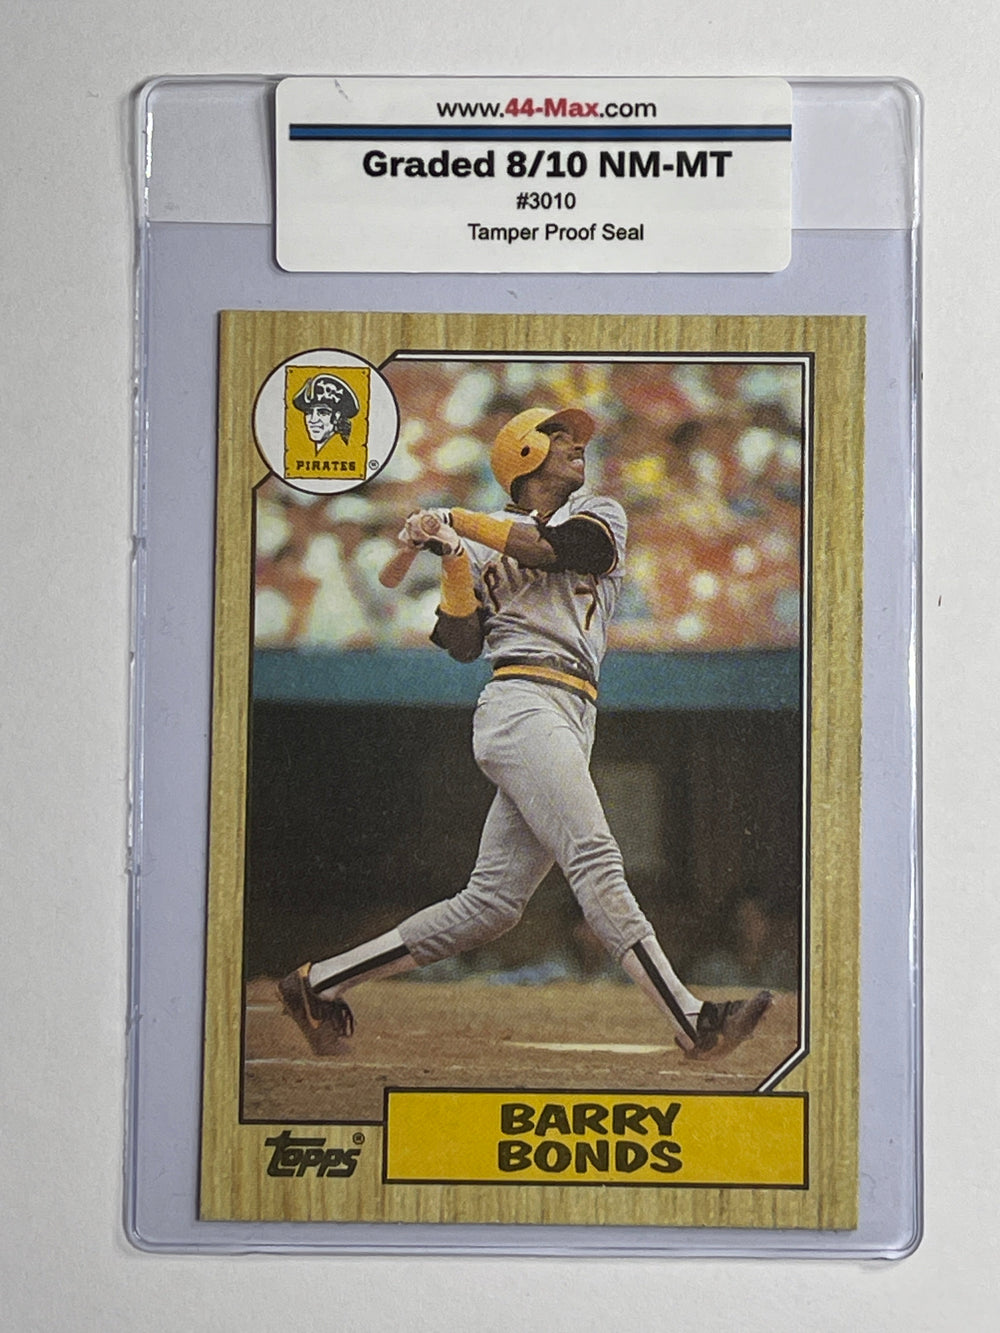 Barry Bonds 1987 Topps Baseball Card. 44-Max 8/10 NM-MT #3010